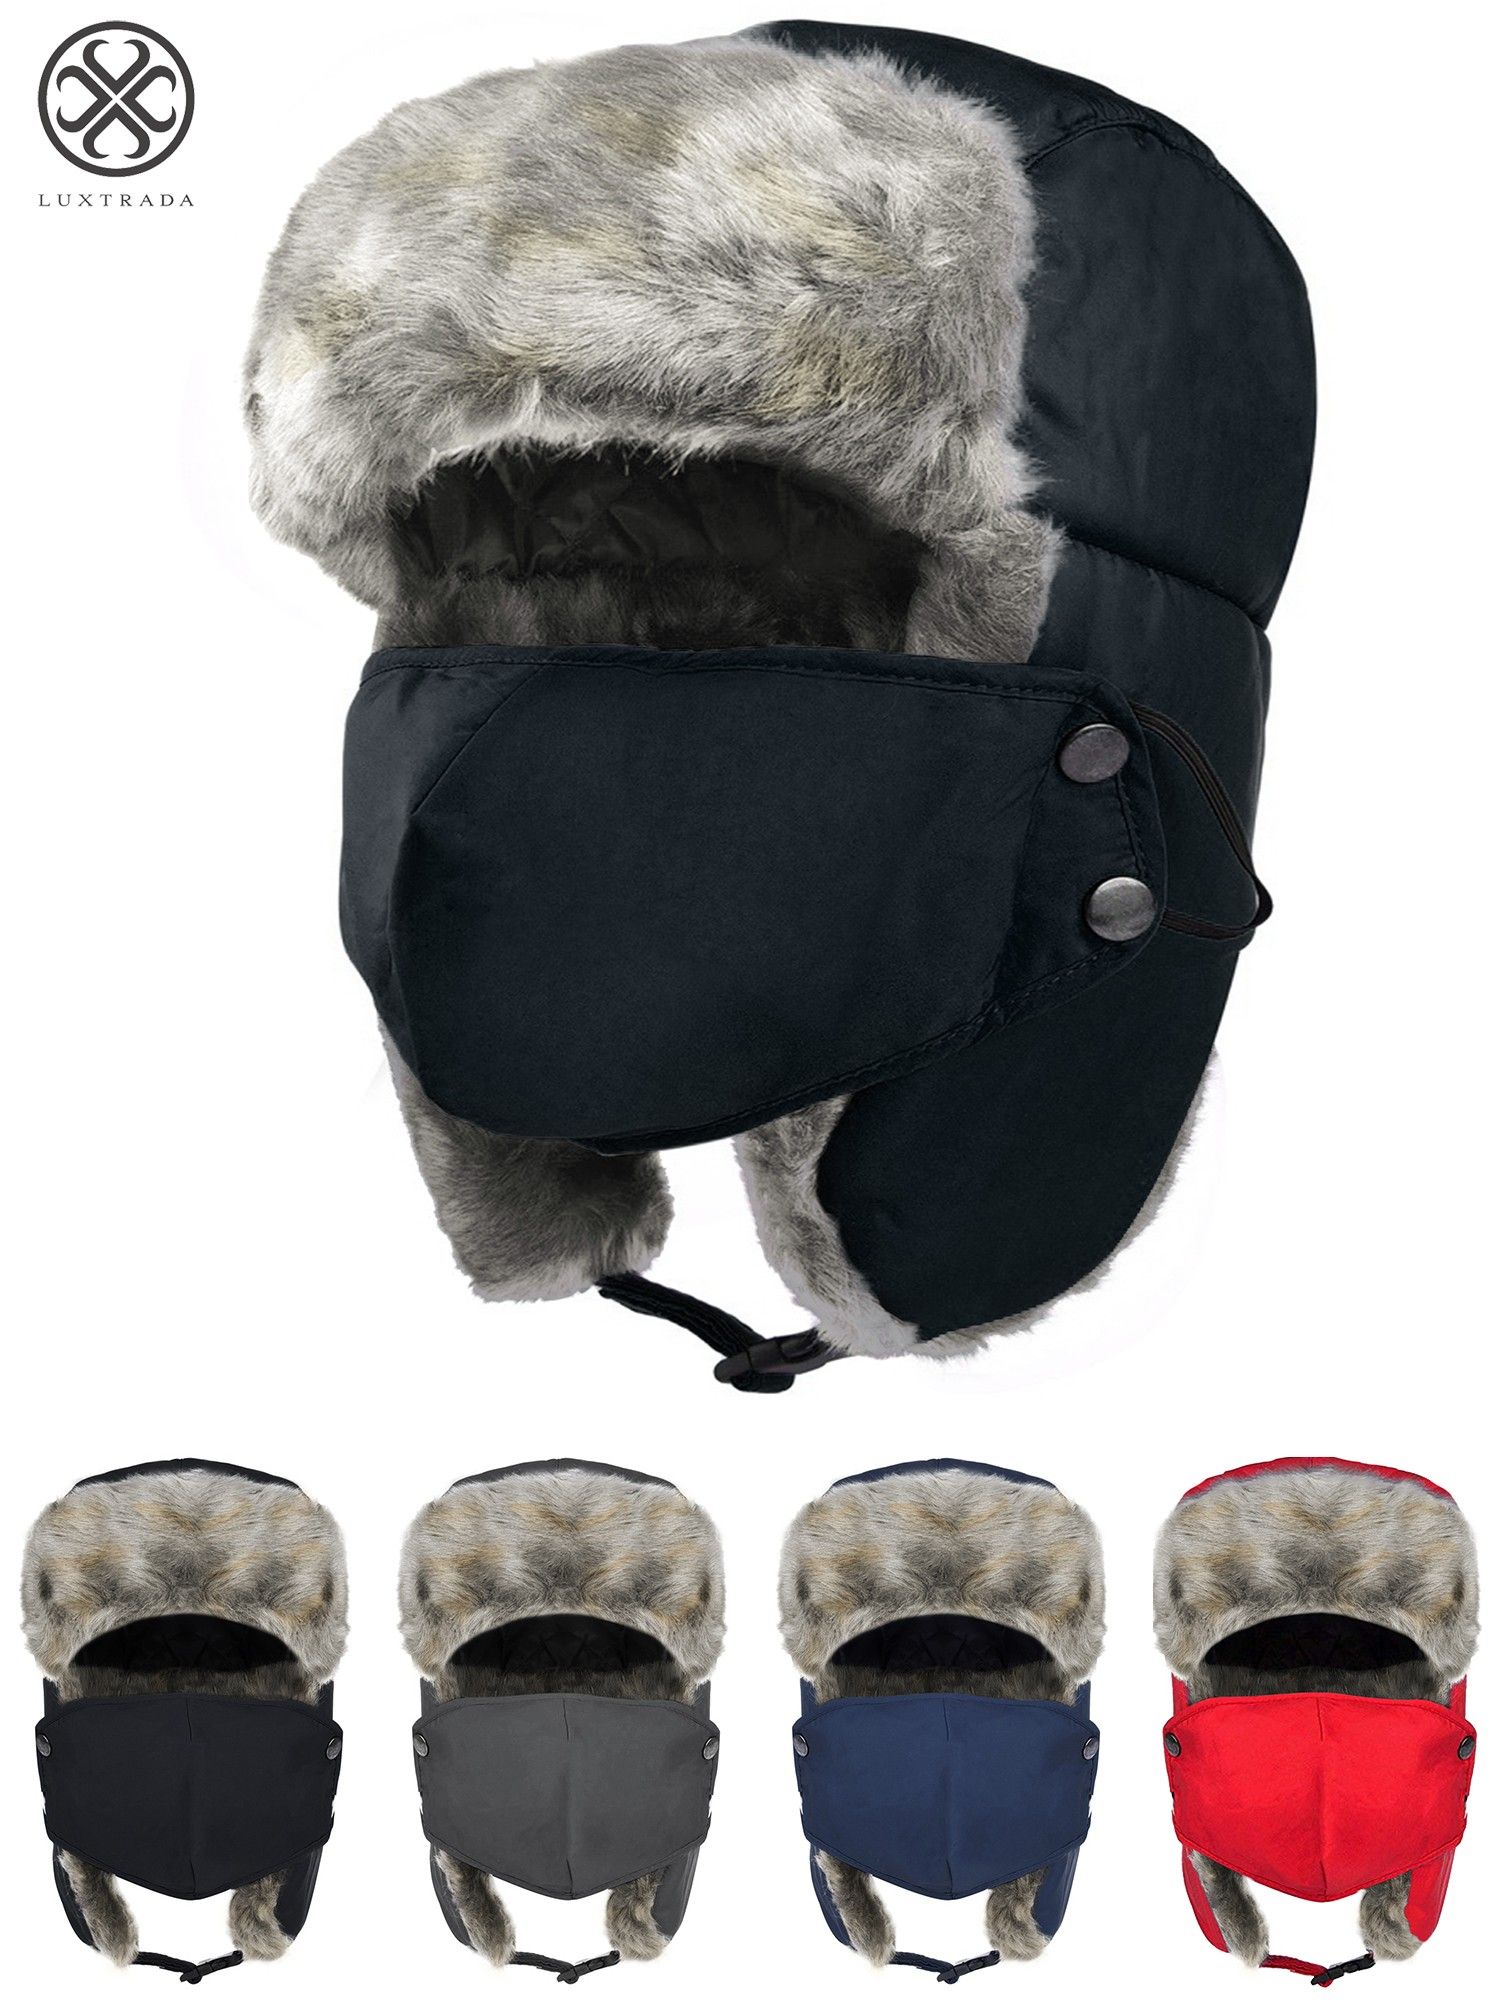 Luxtrada Winter Hats for Men and Women Trooper Hunting Hat Ushanka Hat Ski Hat with Ear Flaps Windproof Waterproof Warm Hat (Black) - image 1 of 10